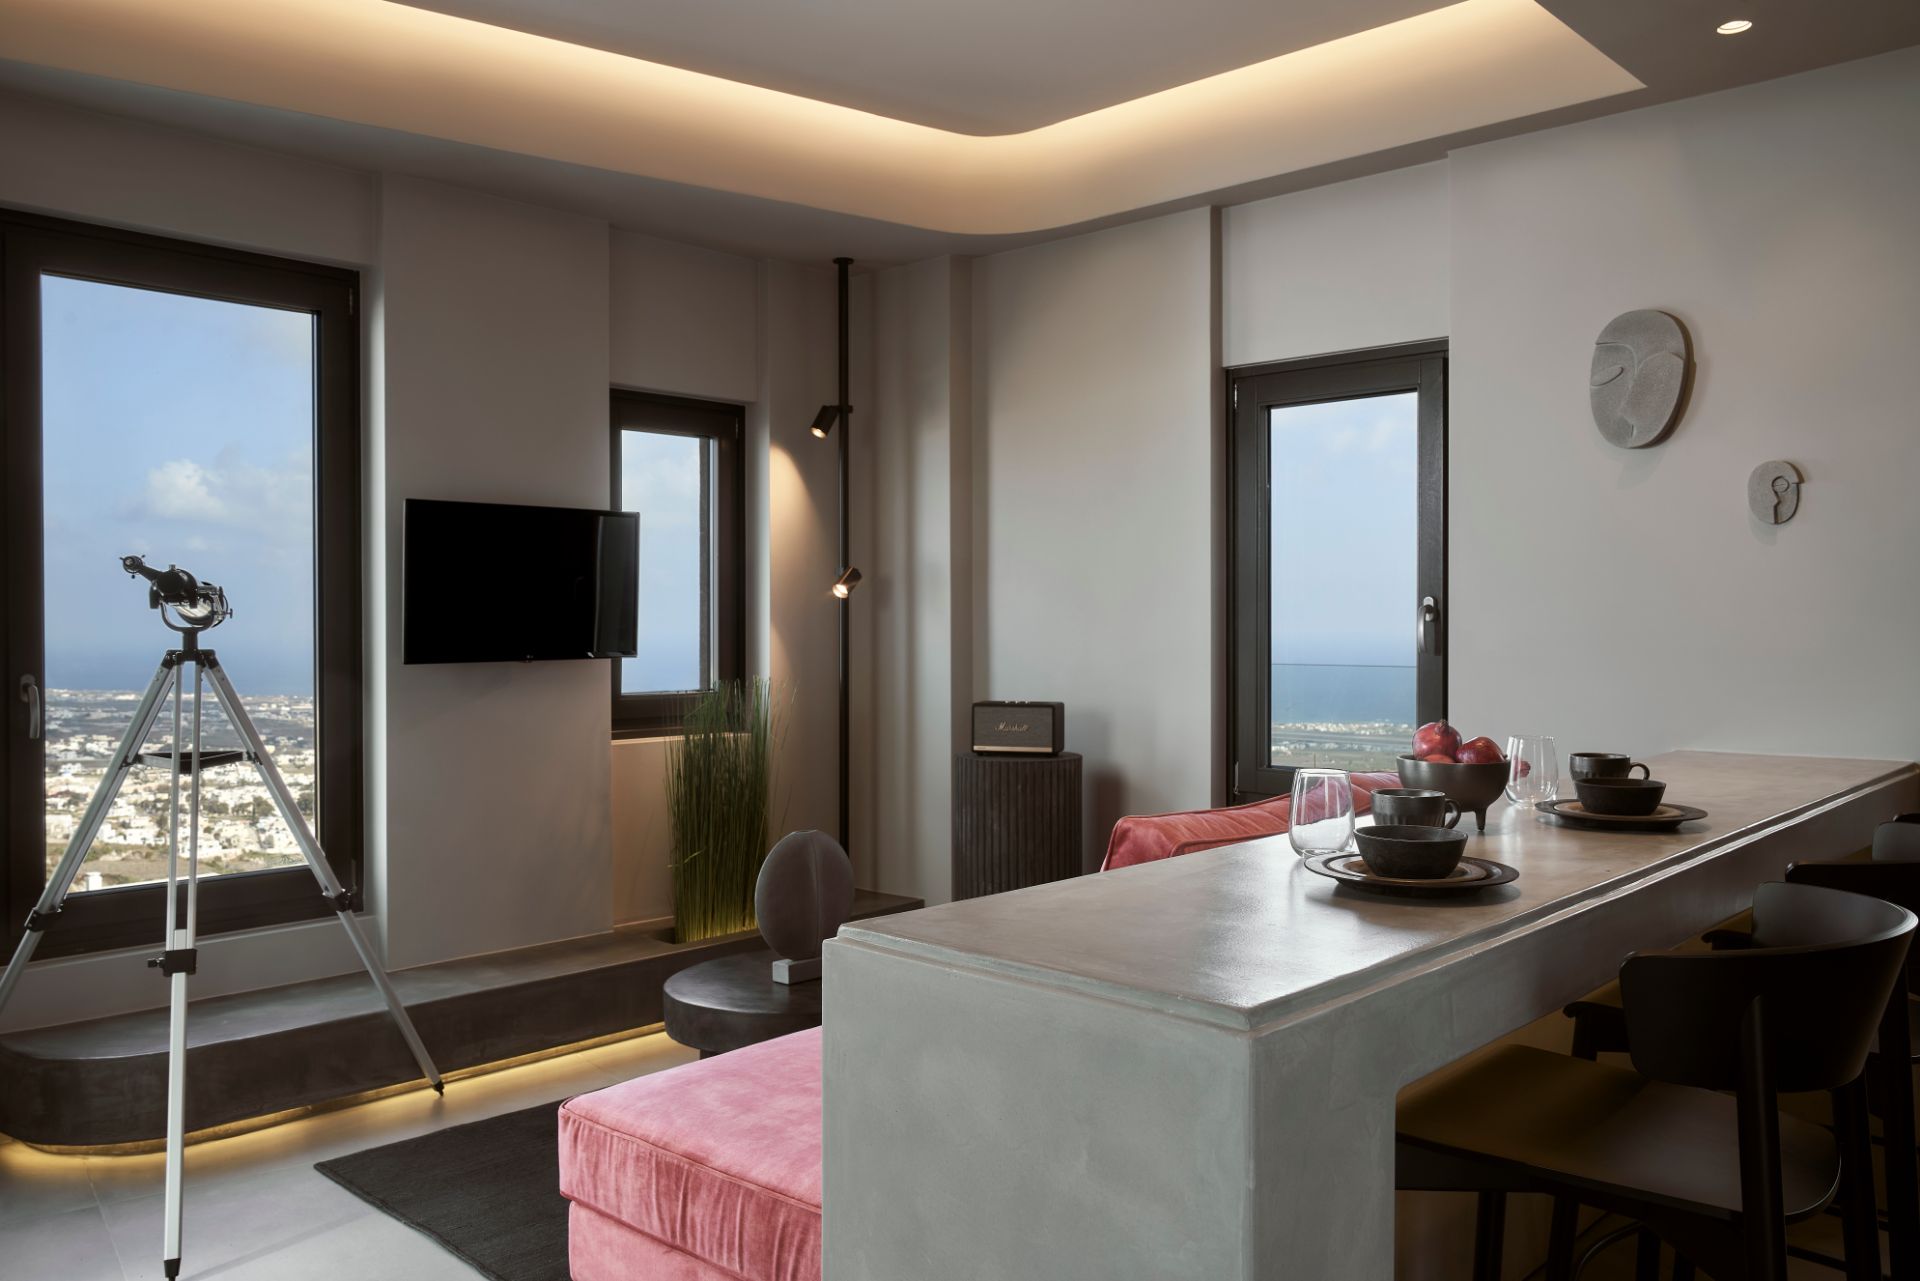 Apikia-Santorini-Honeymoon-Suite-Outdoor-Hot-Tub-Panoramic-View-1-1